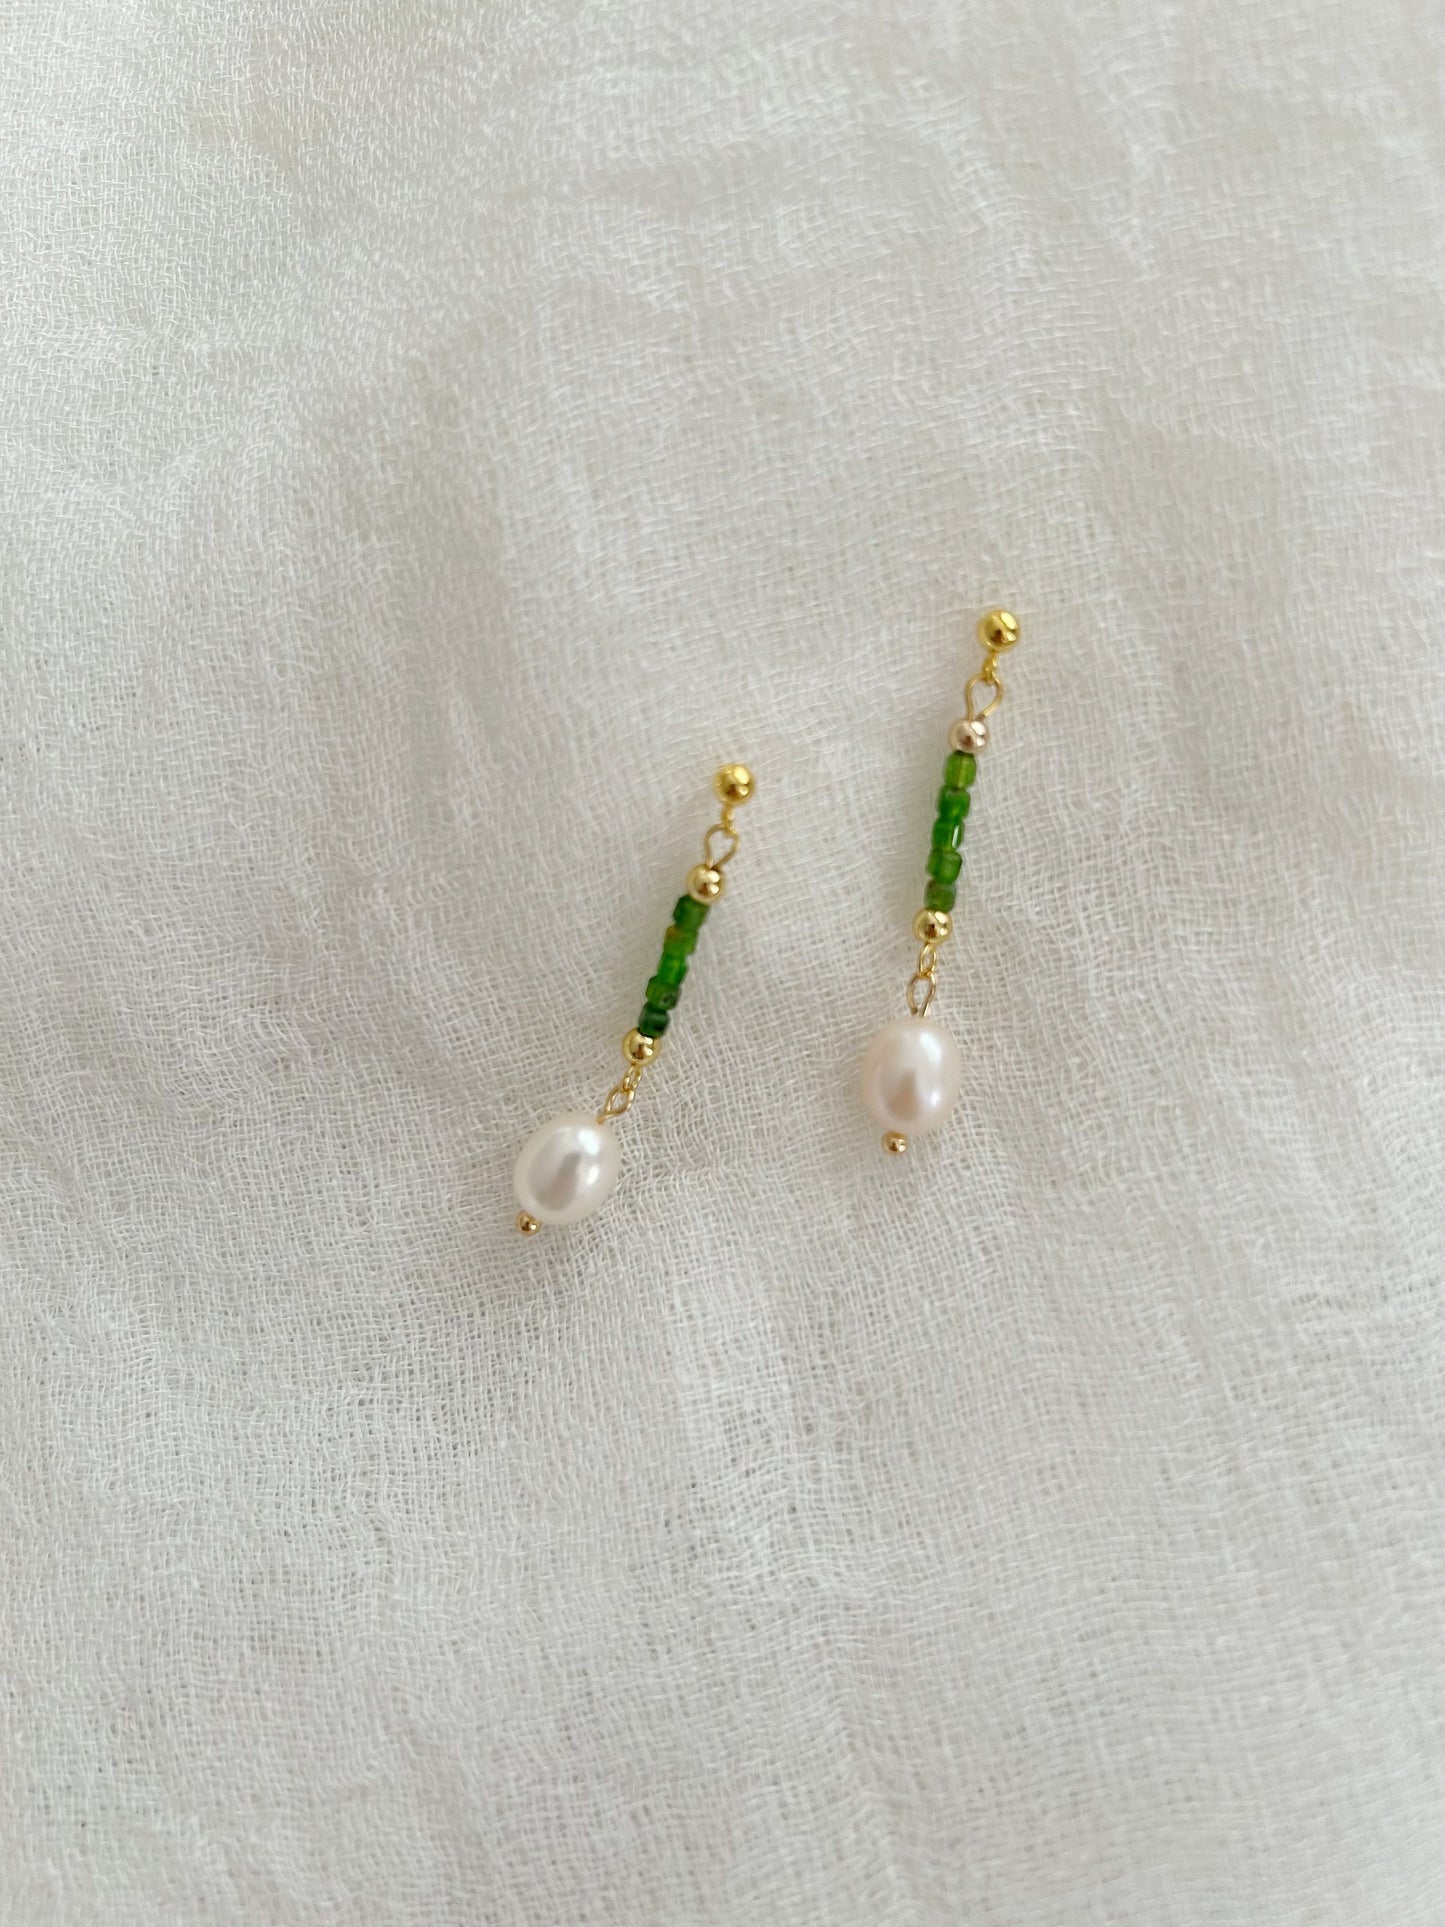 Green pyroxene Pearl earrings, natural green augite earrings, Natural gemstone ear drop